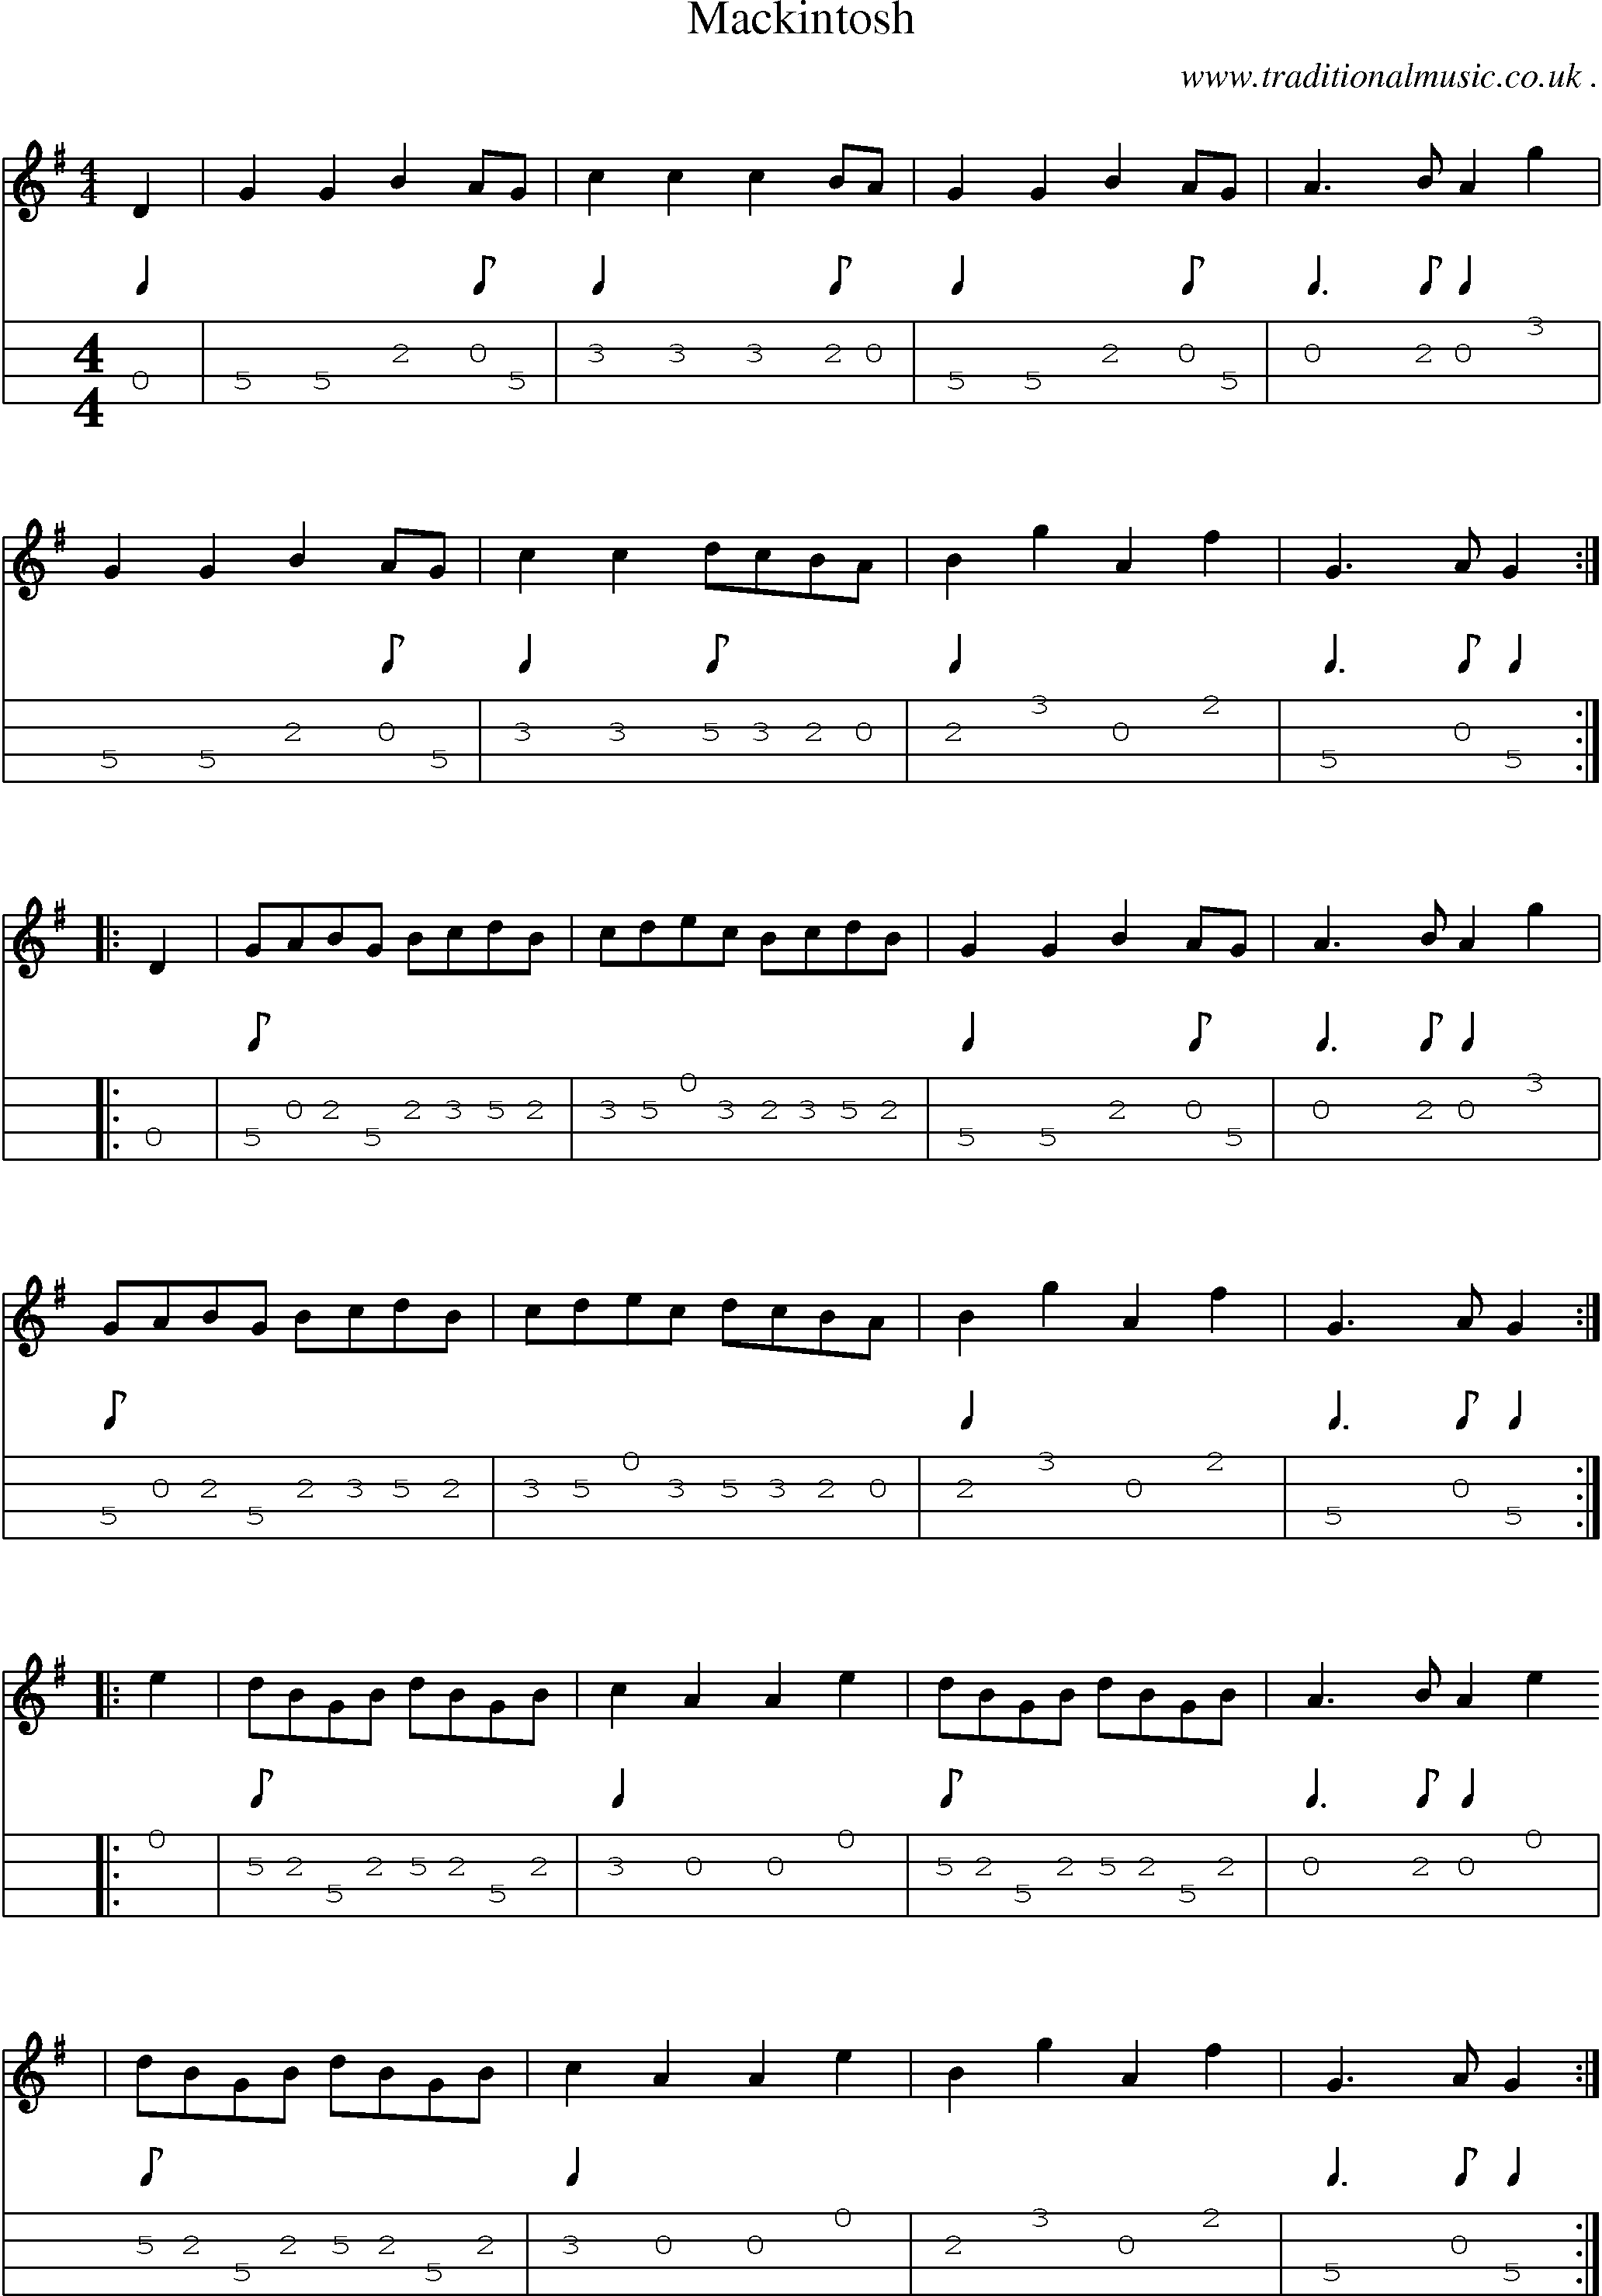 Sheet-Music and Mandolin Tabs for Mackintosh